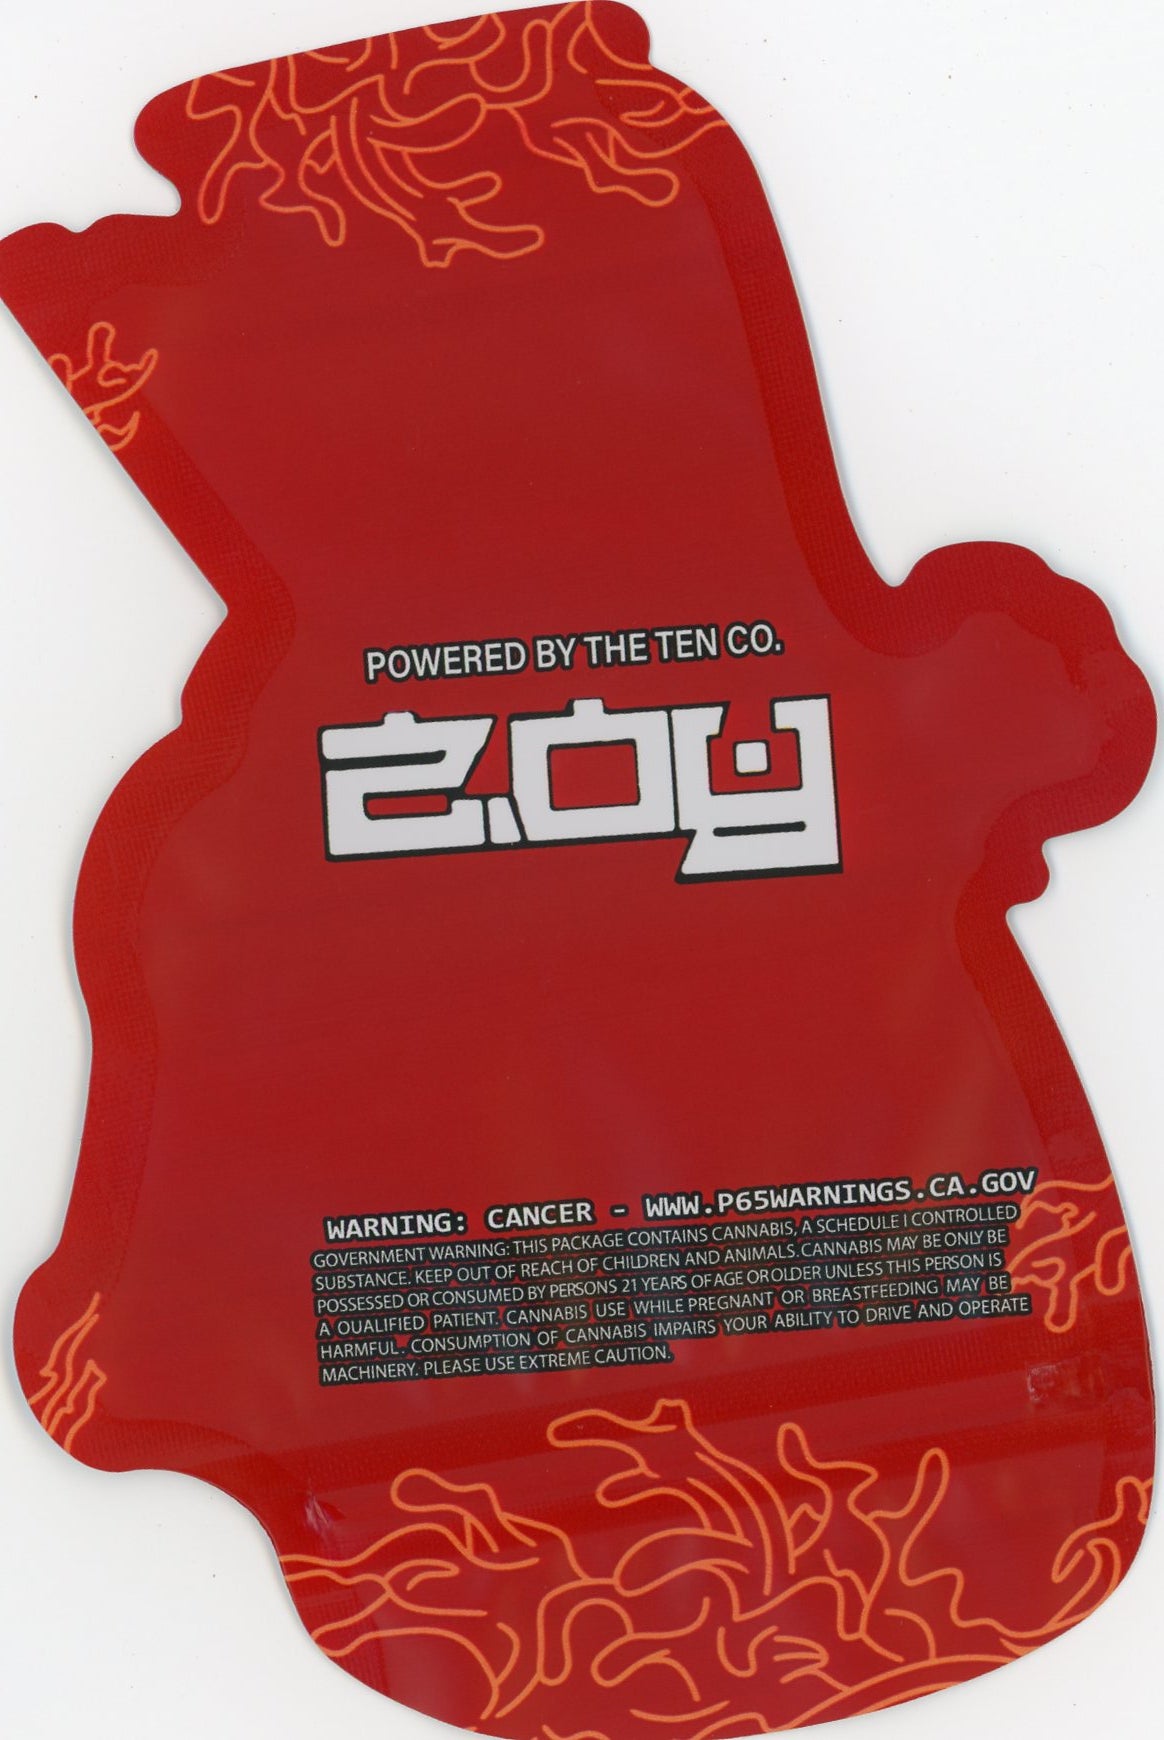 Zoy Mylar Bags 3.5g Grams The Ten Co DIE-CUT MYLAR BAG back